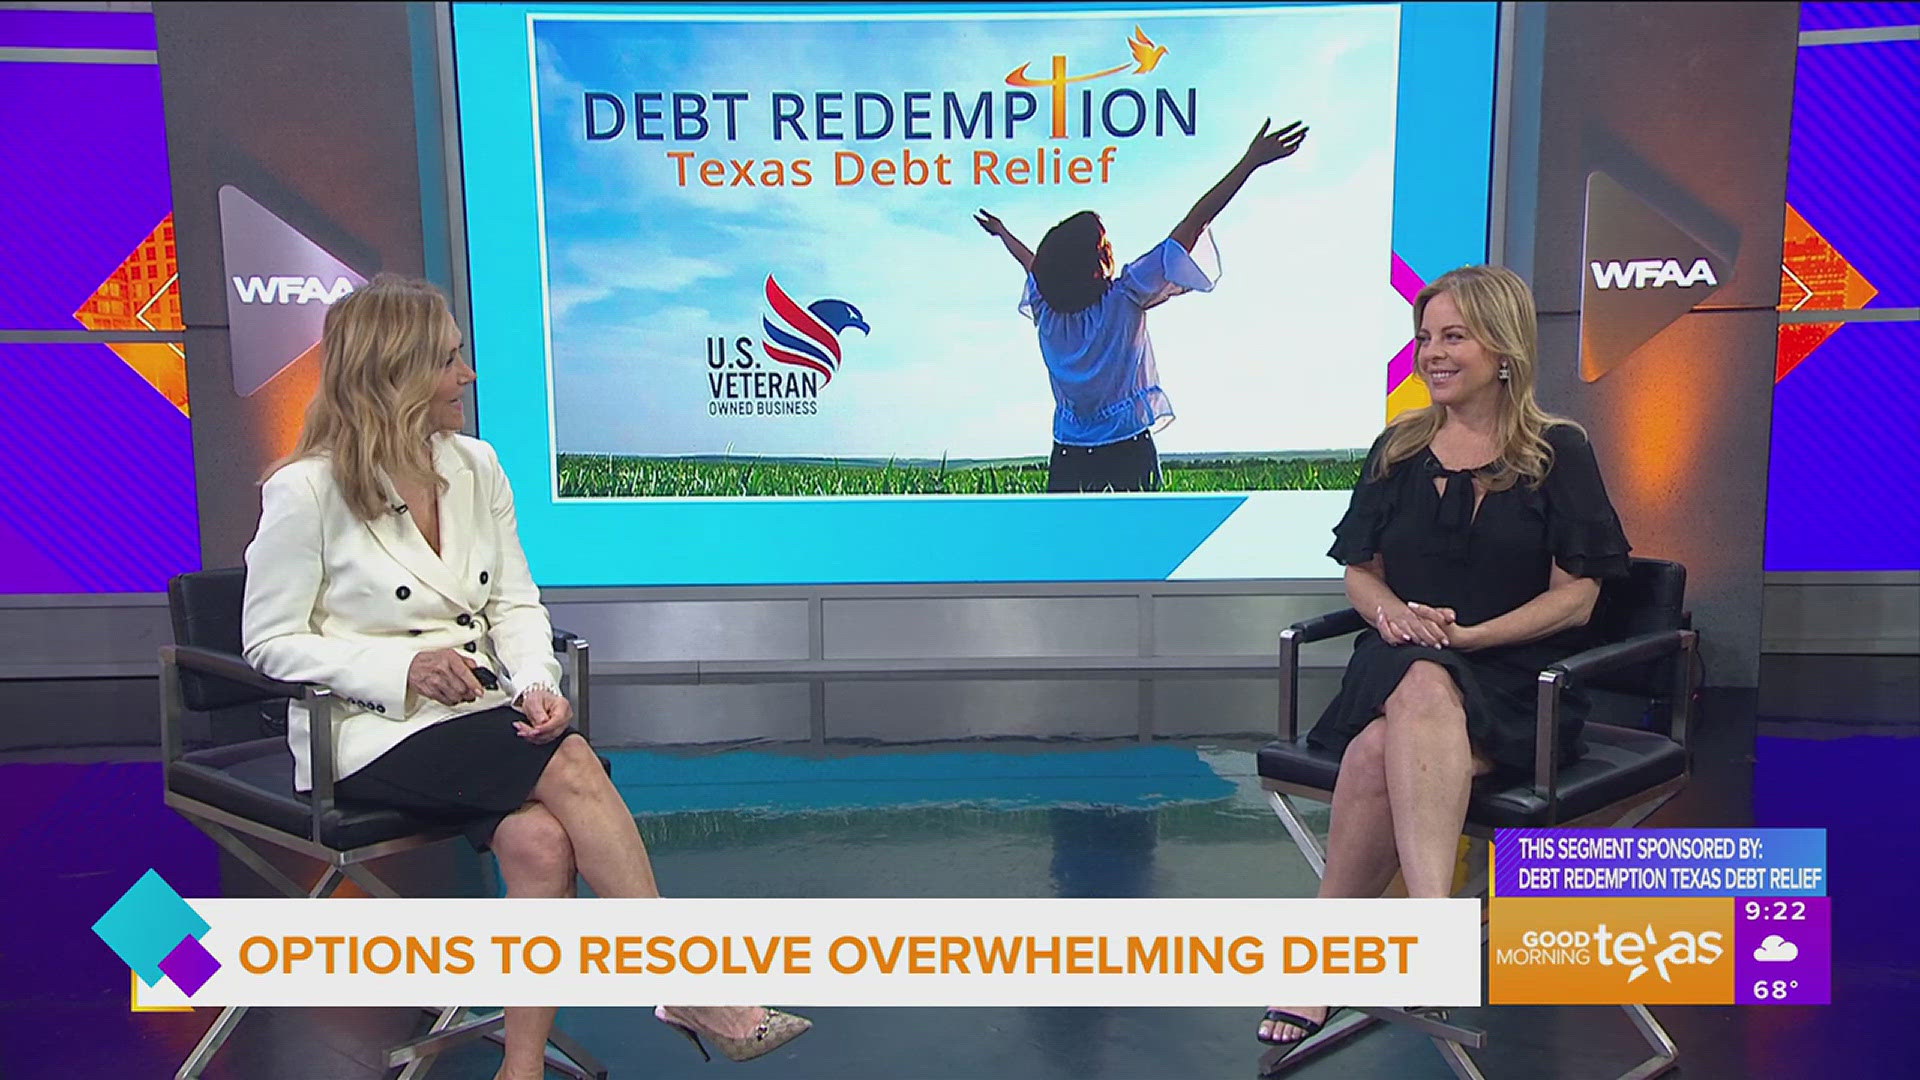 This segment is sponsored by: Debt Redemption Texas Debt Relief